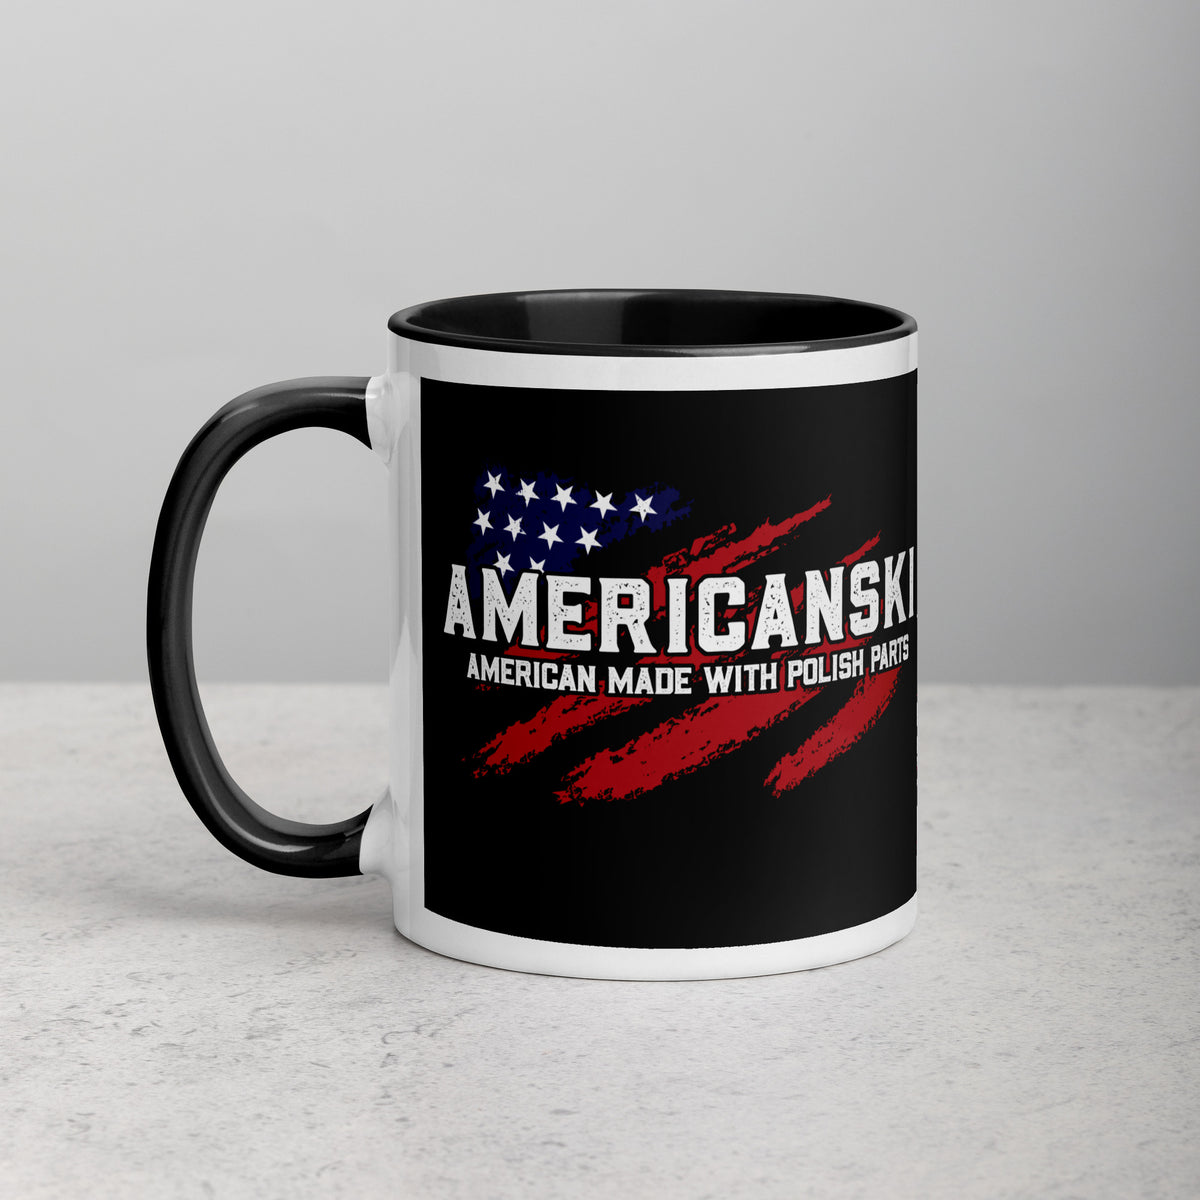 Americanski Coffee Mug with Color Inside  Polish Shirt Store Black 11 oz 